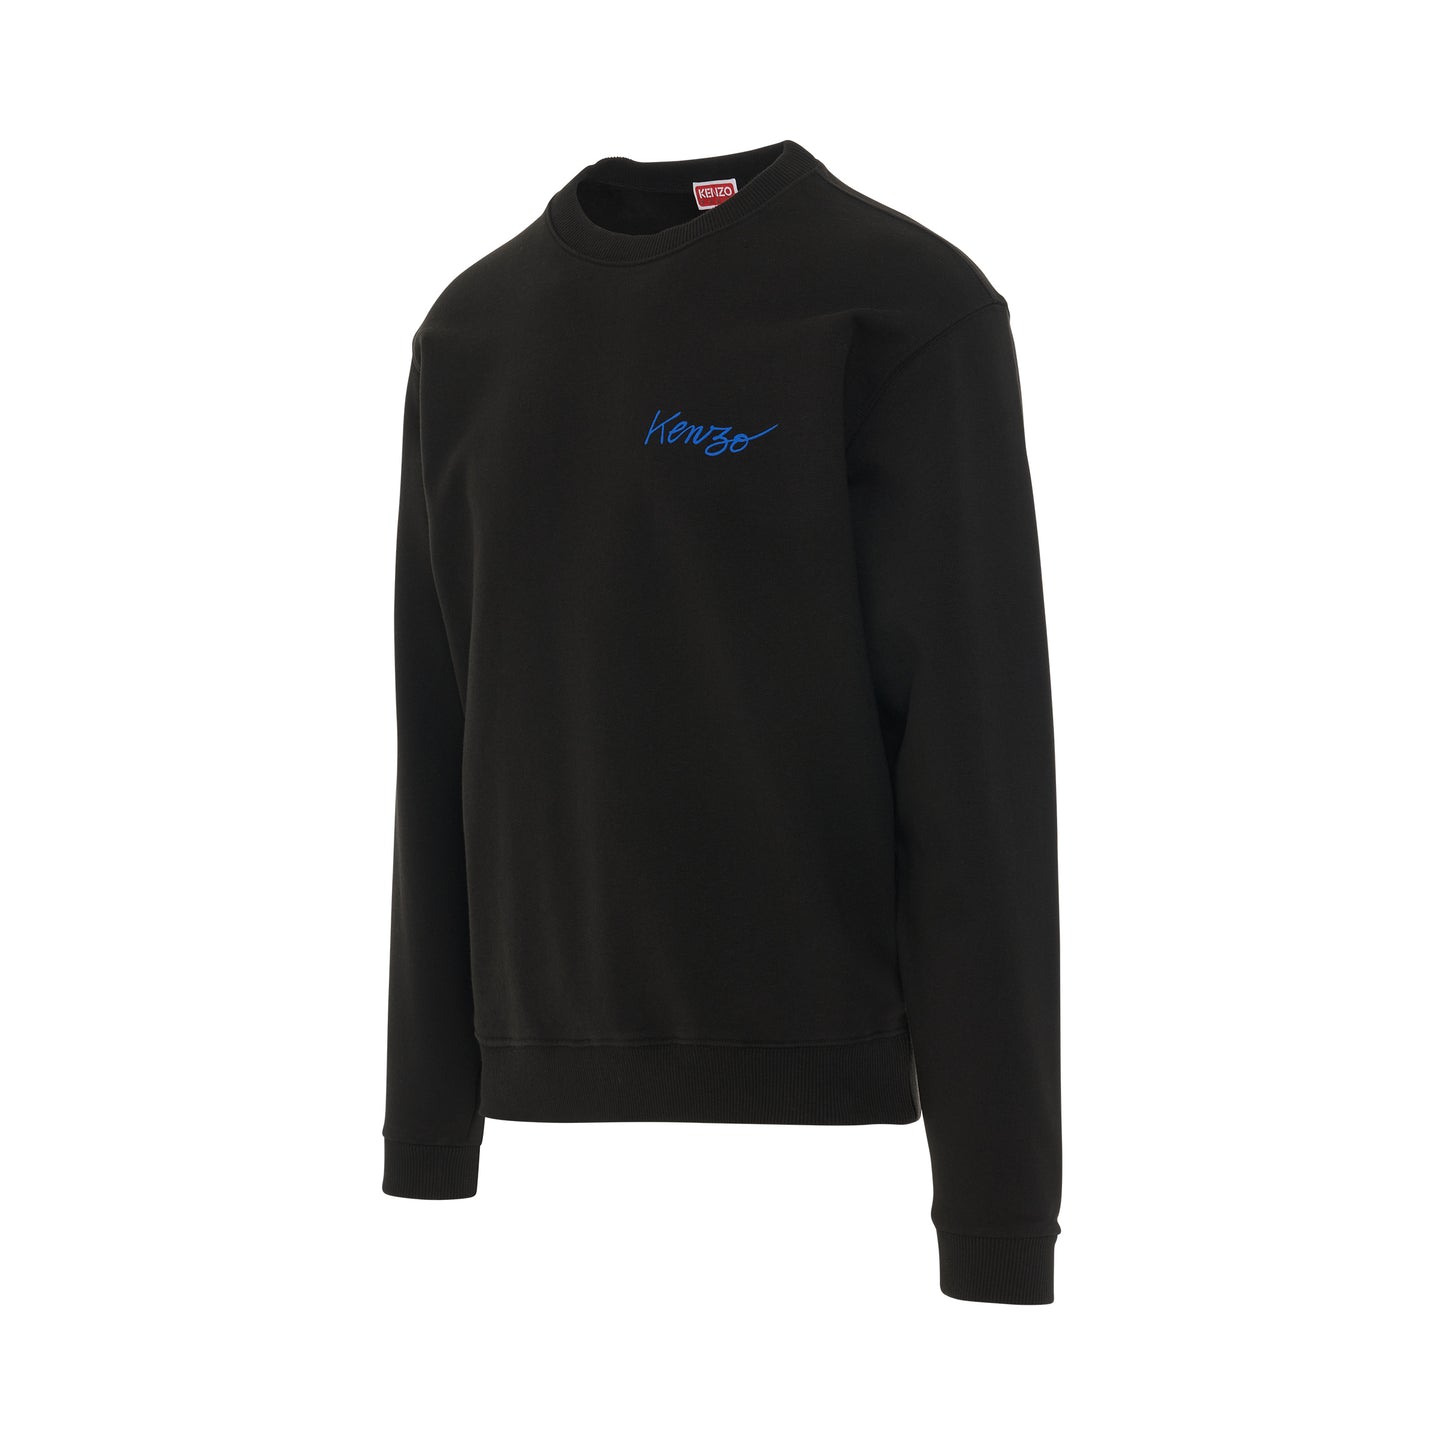 Poppy Print Sweatshirt in Black